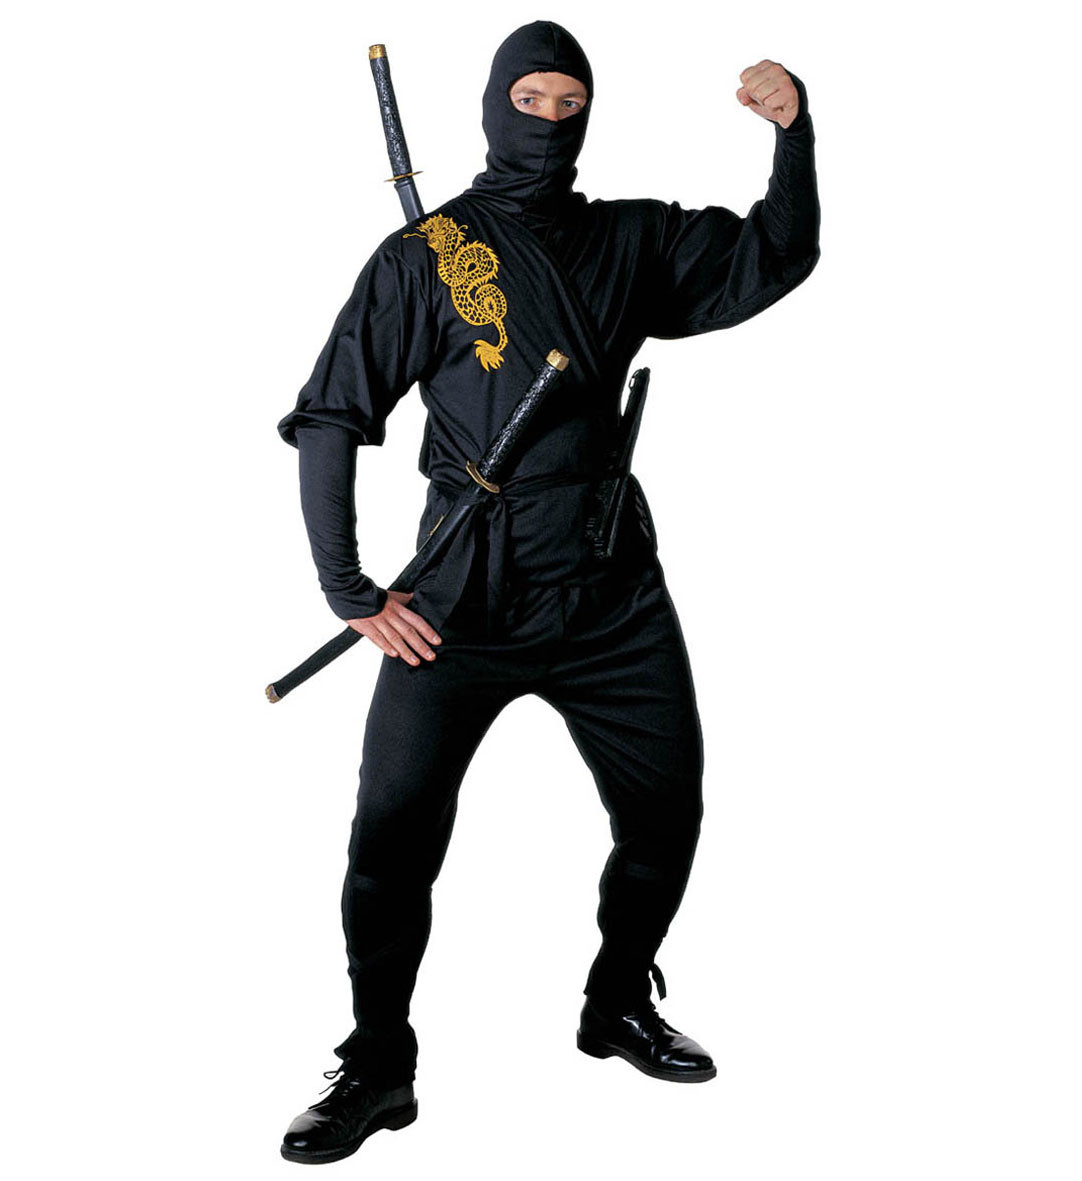 Costume Carnevale uomo travestimento adulto ninja nero S M L  *19839  pelusciamo store